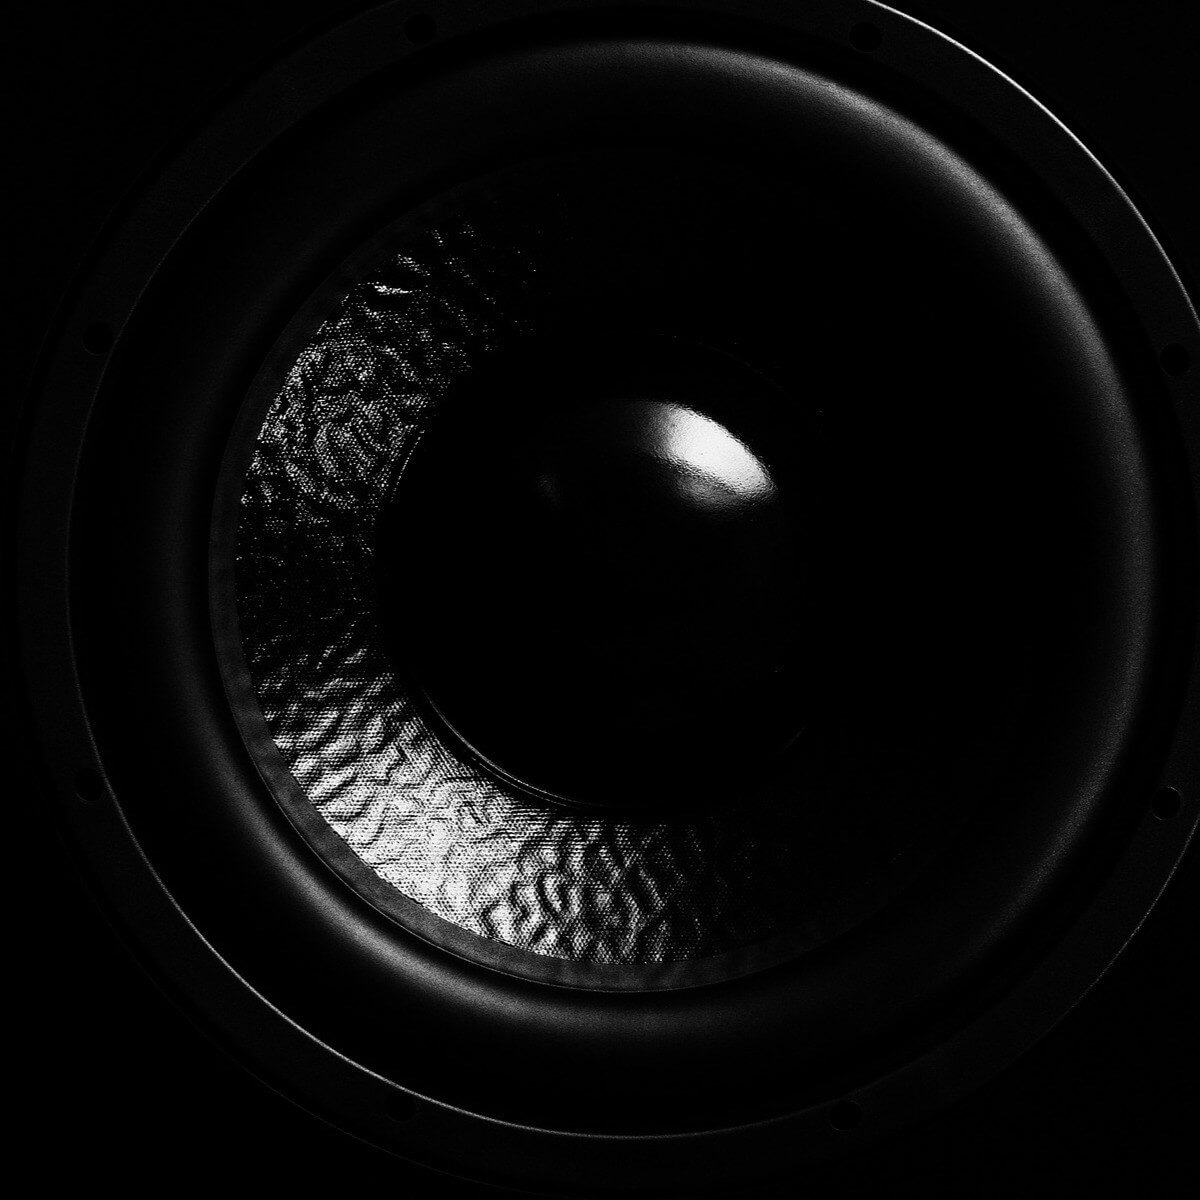 Black friday enhanced bass speakers - subwoofer membrane close-up